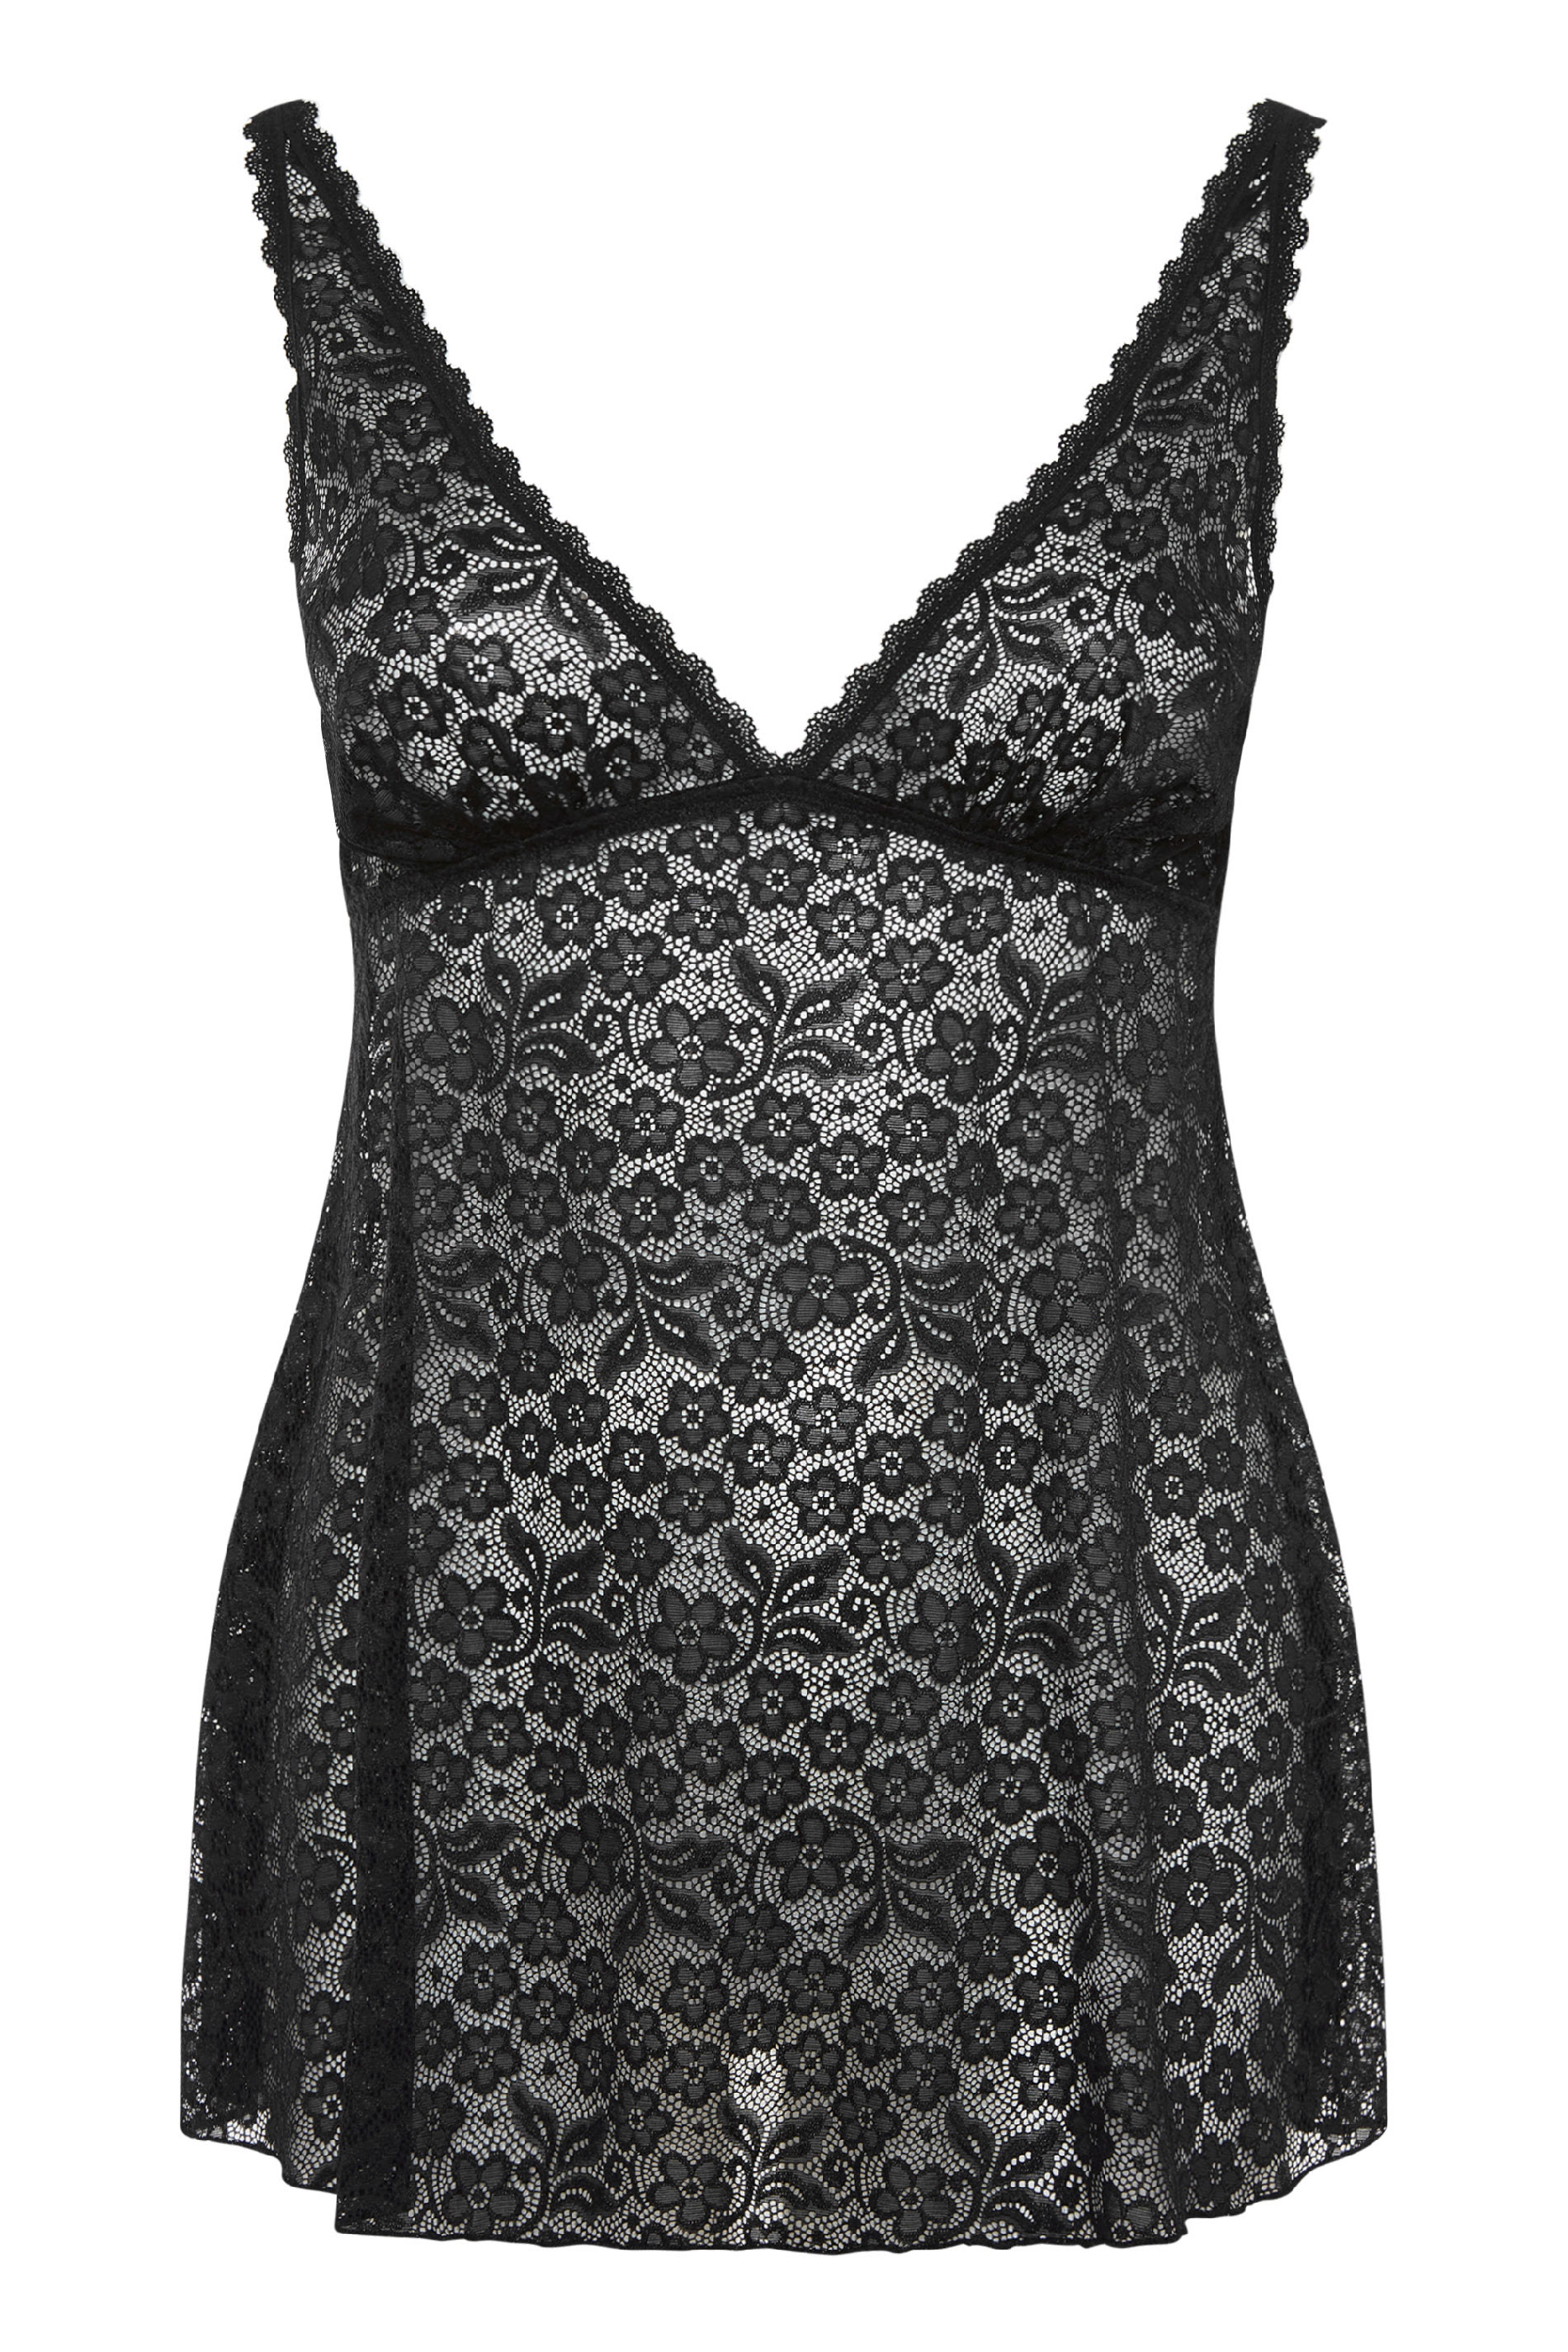 Plus Size Black Boudoir Lace Babydoll | Yours Clothing